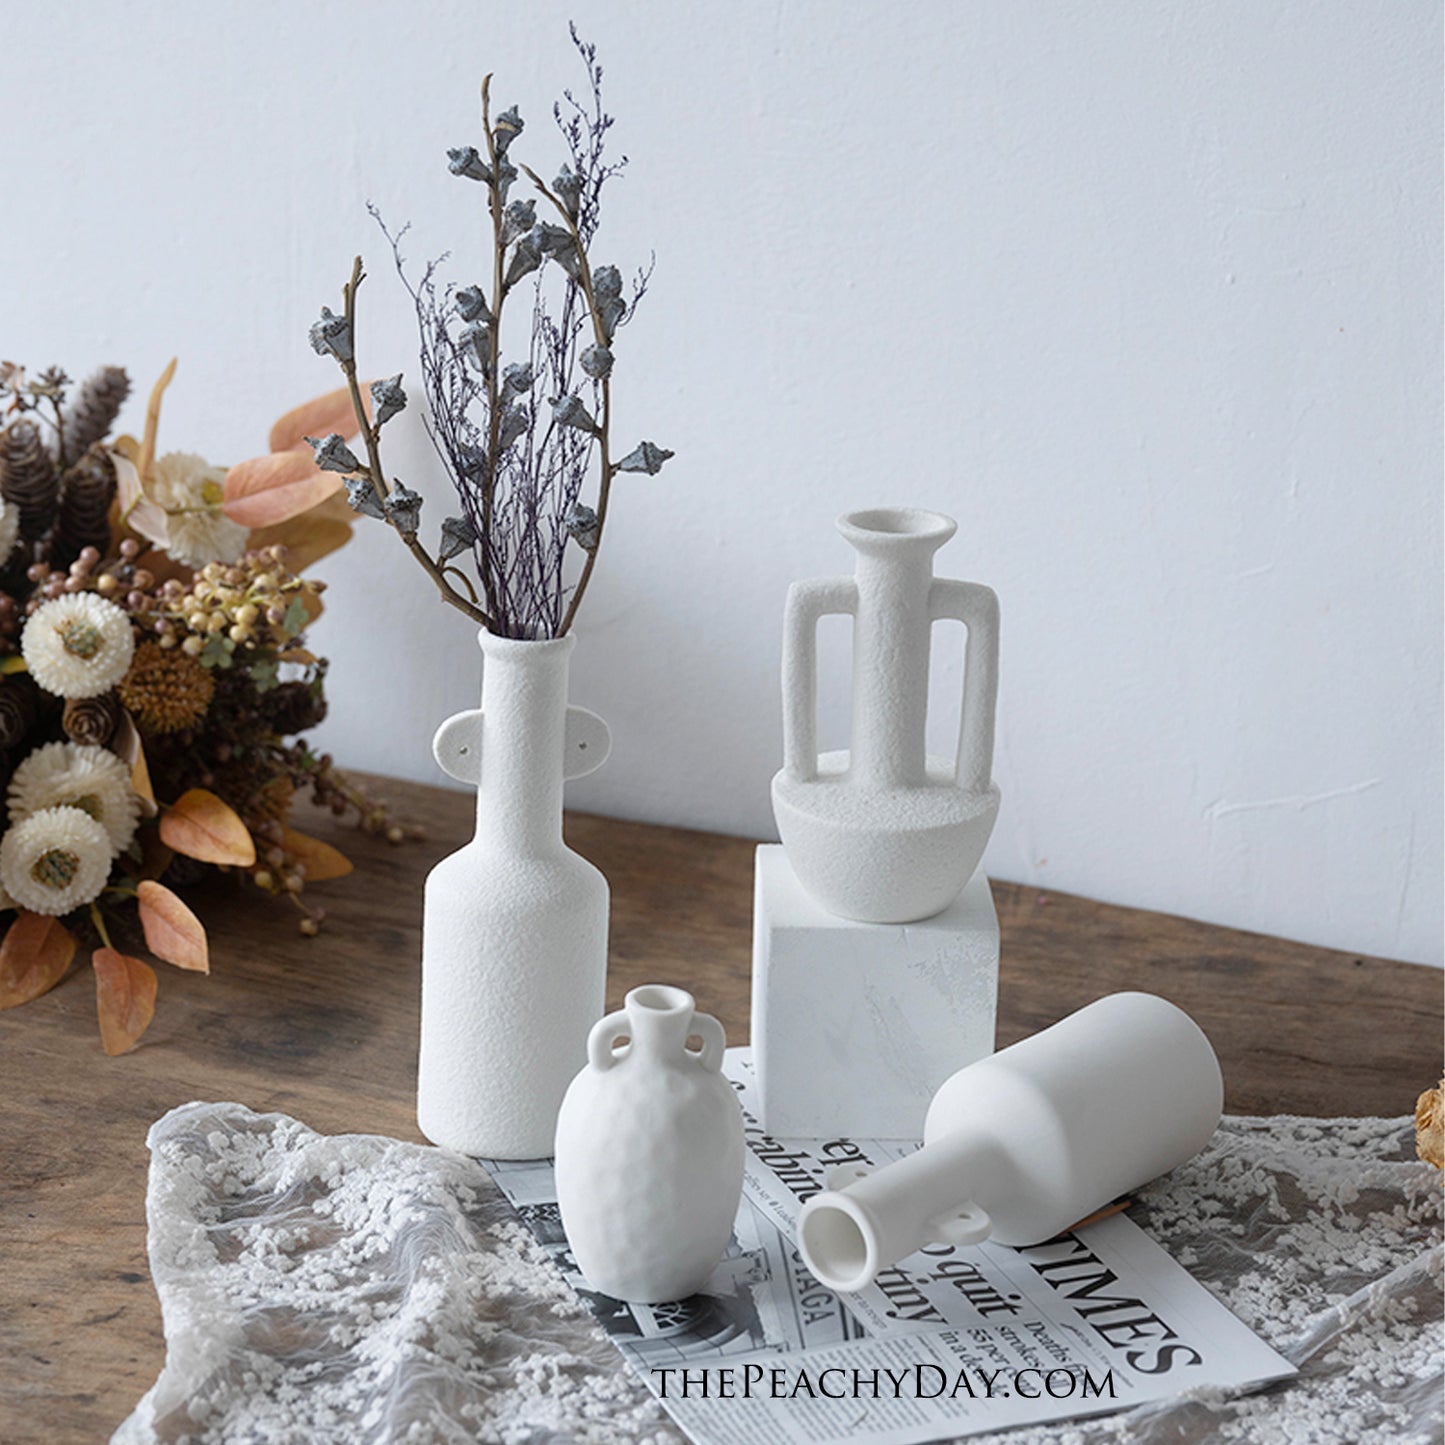 Ceramic Floral Vase with Handles